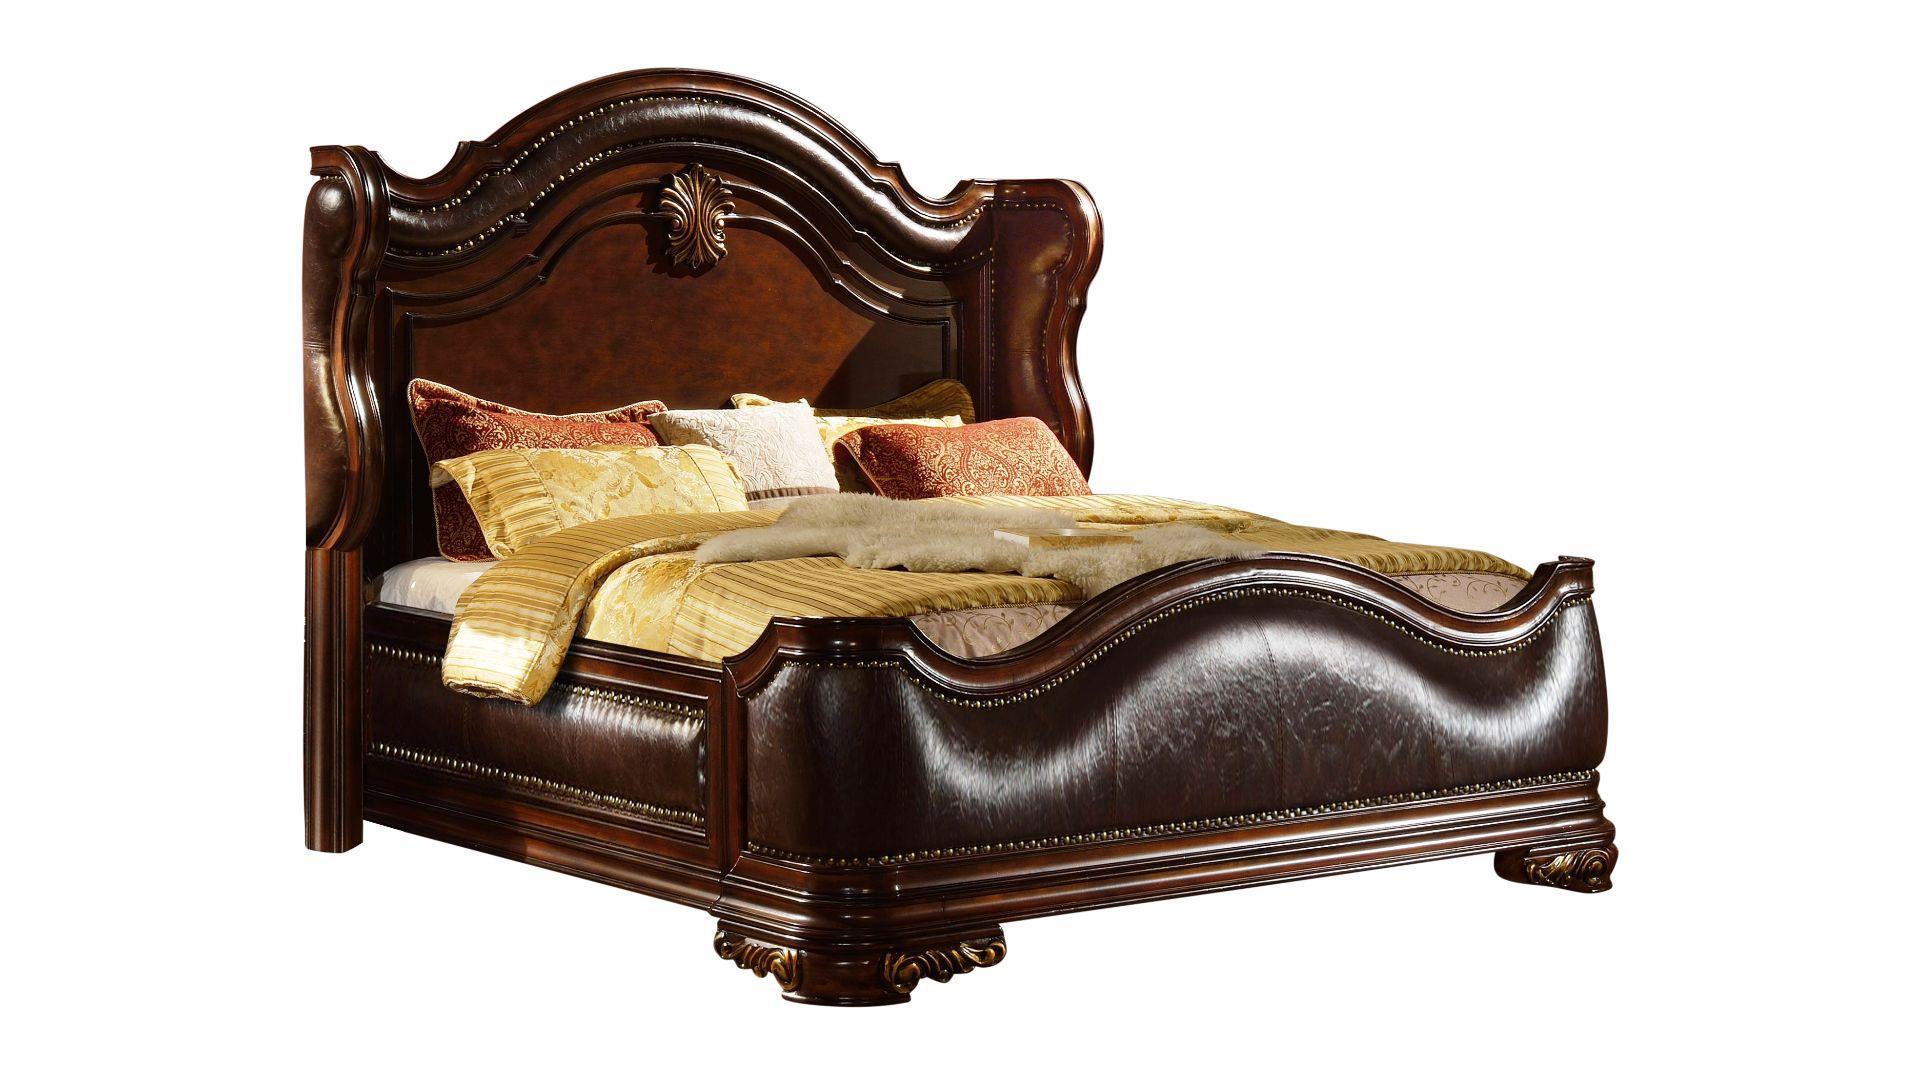 

    
Royal Dark Walnut Carved Wood King Bed Set 4Pcs BELLA Galaxy Home Traditional
